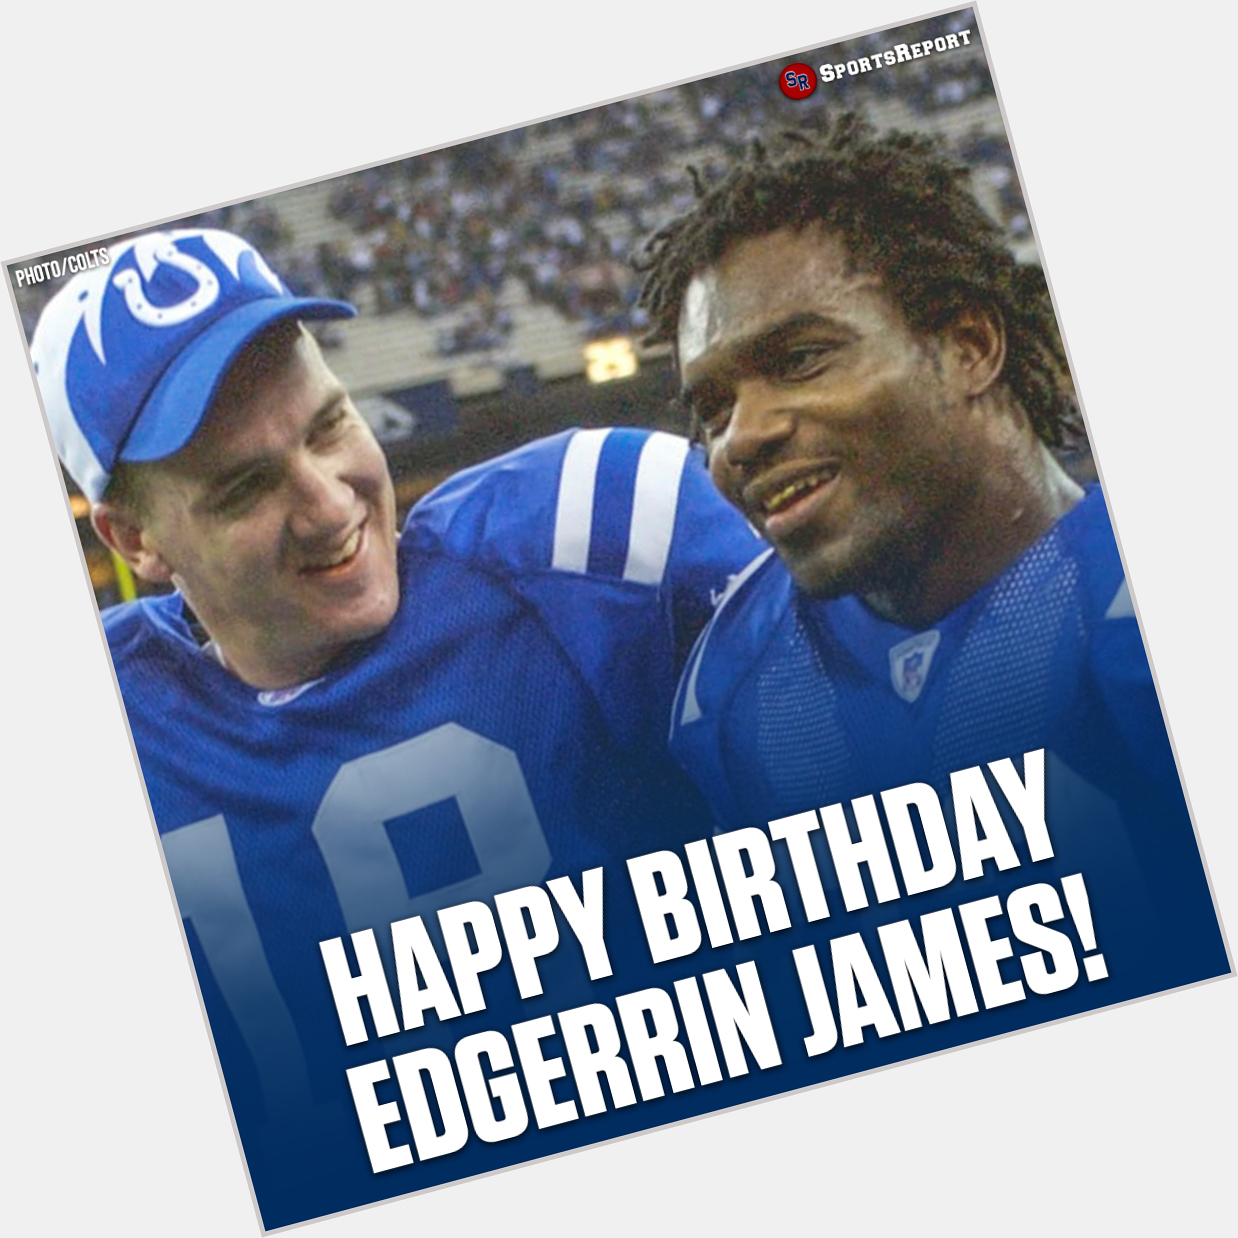 Colts Fans, let\s wish Legend Edgerrin James a Happy Birthday! 